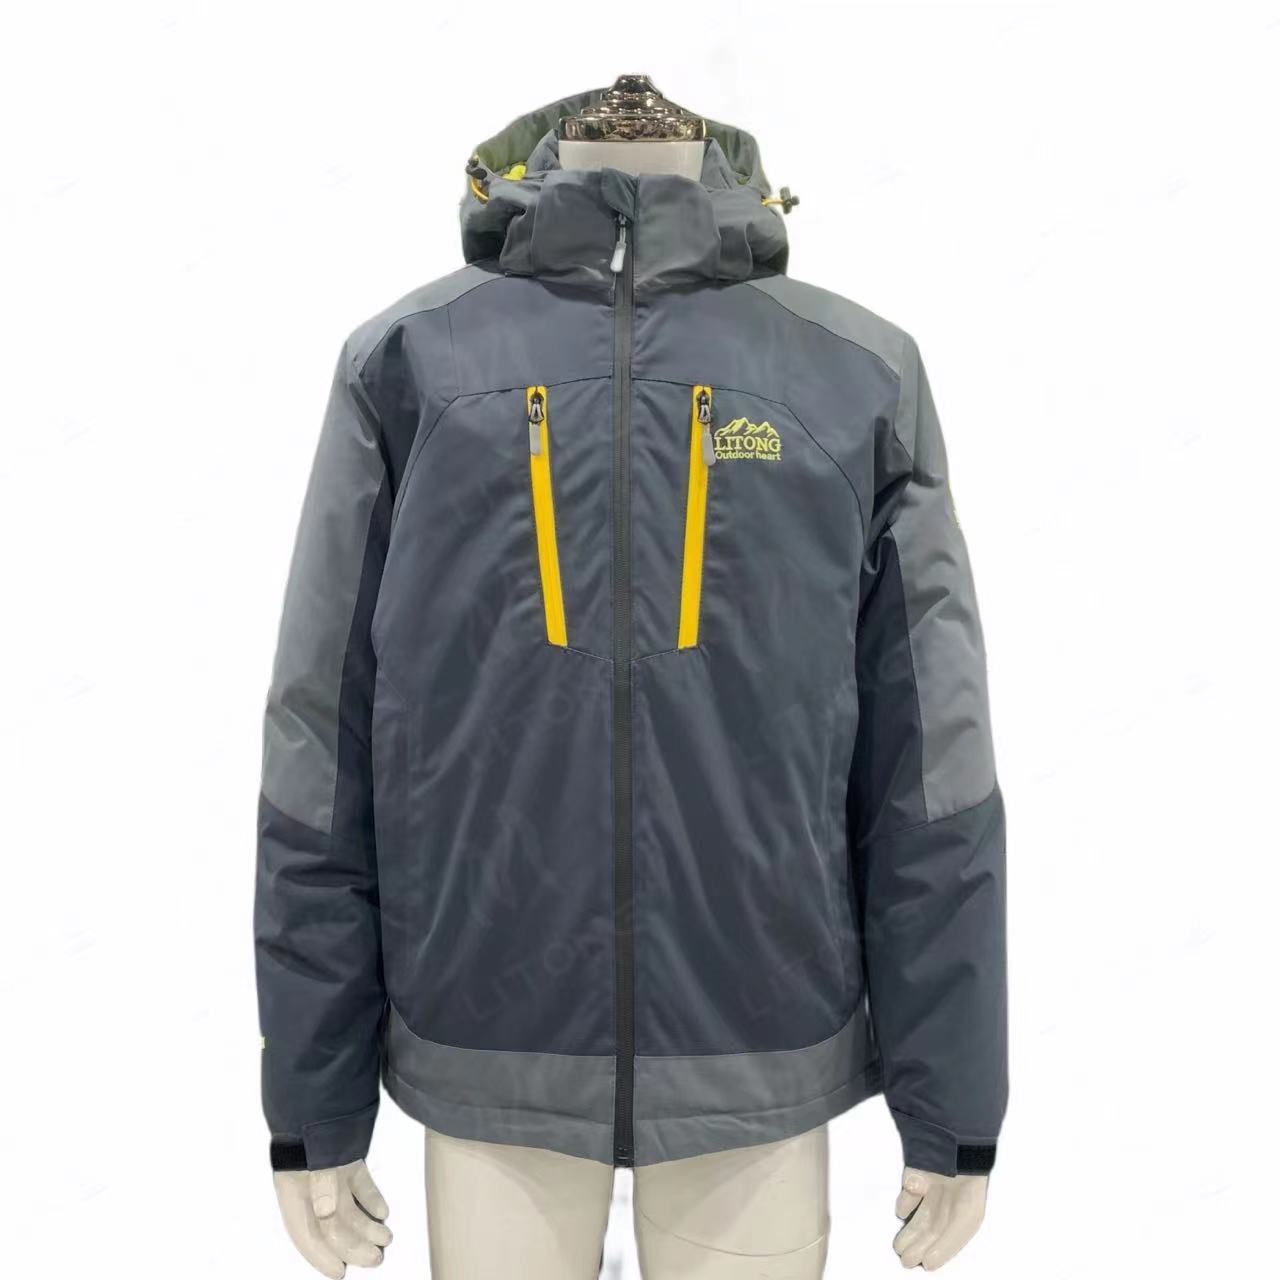 Man winter ski jacket outdoor jacket